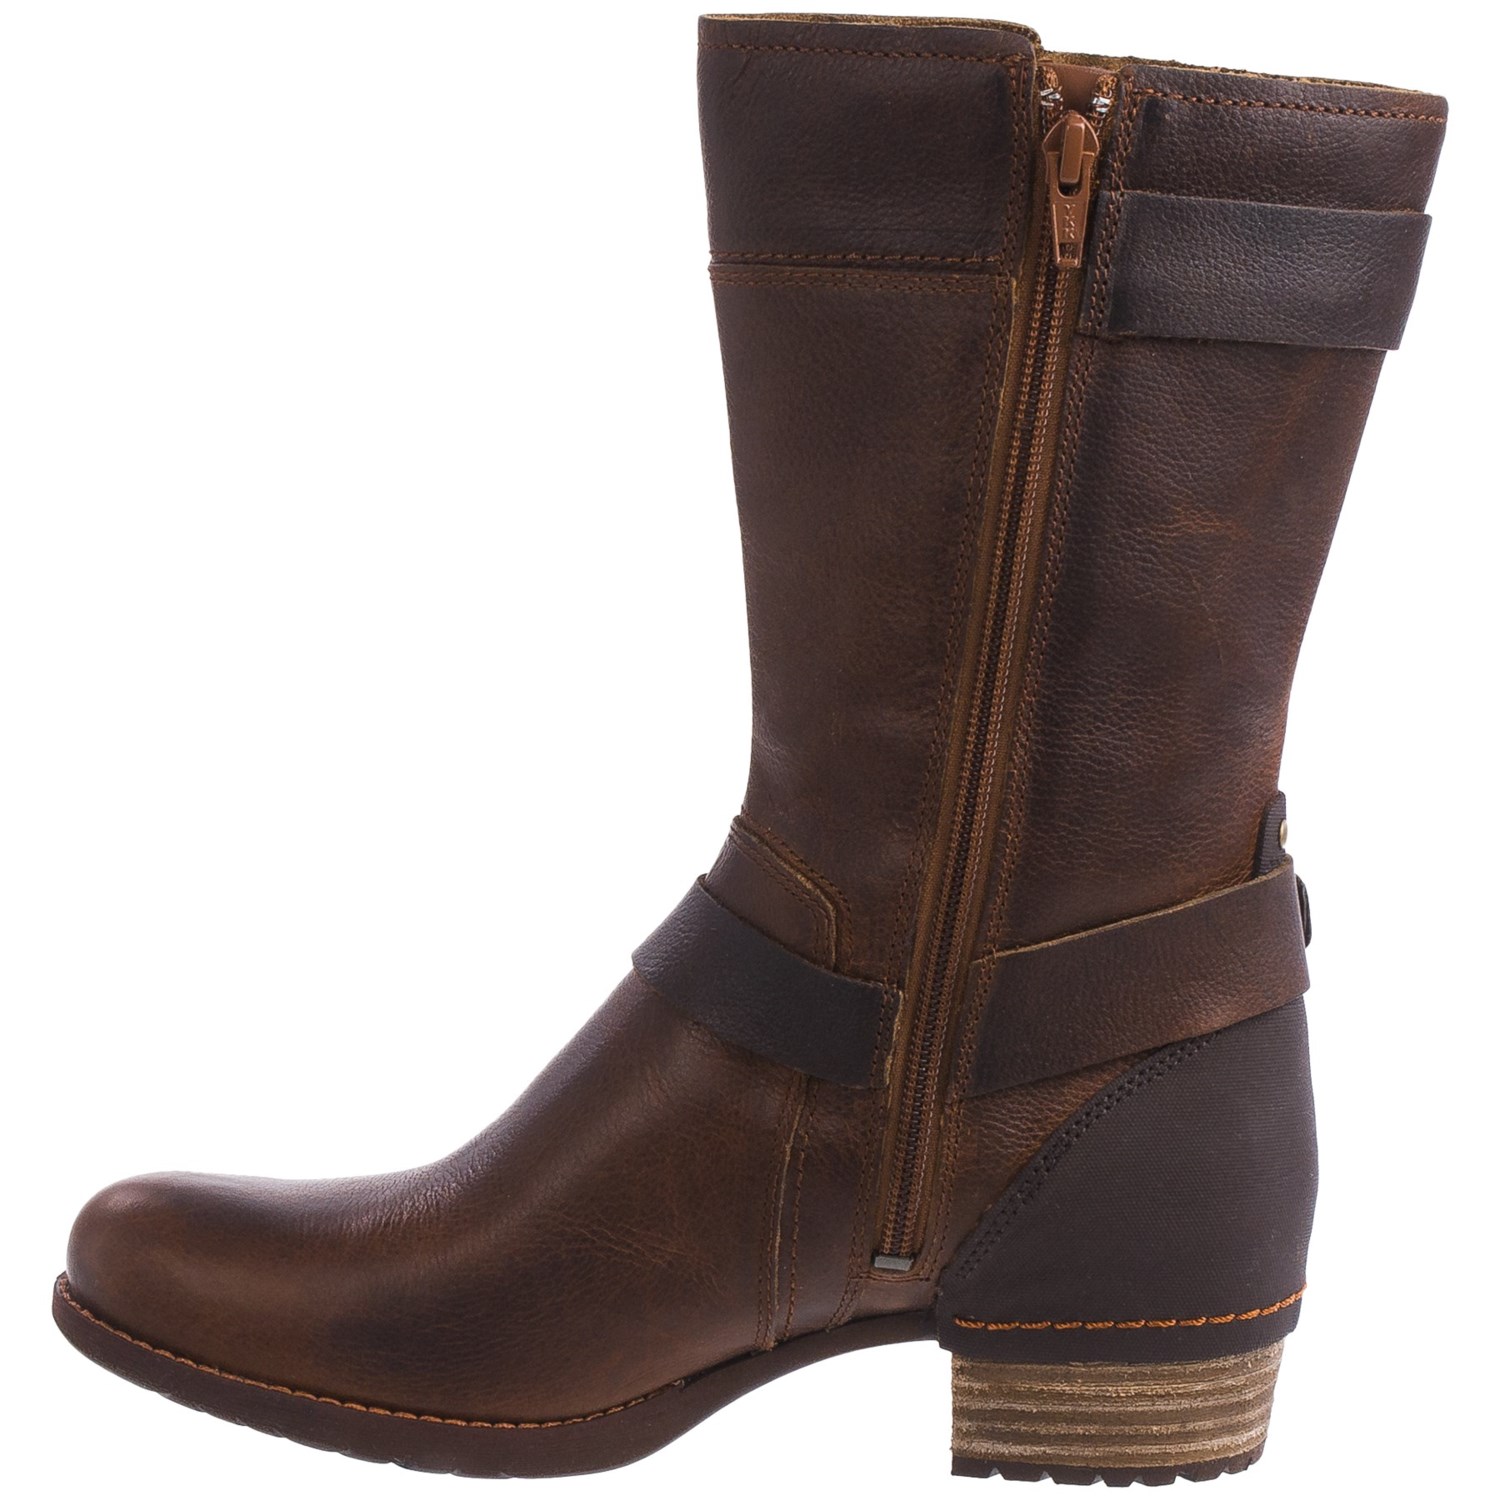 Merrell Shiloh Peak Boots (For Women) - Save 64%